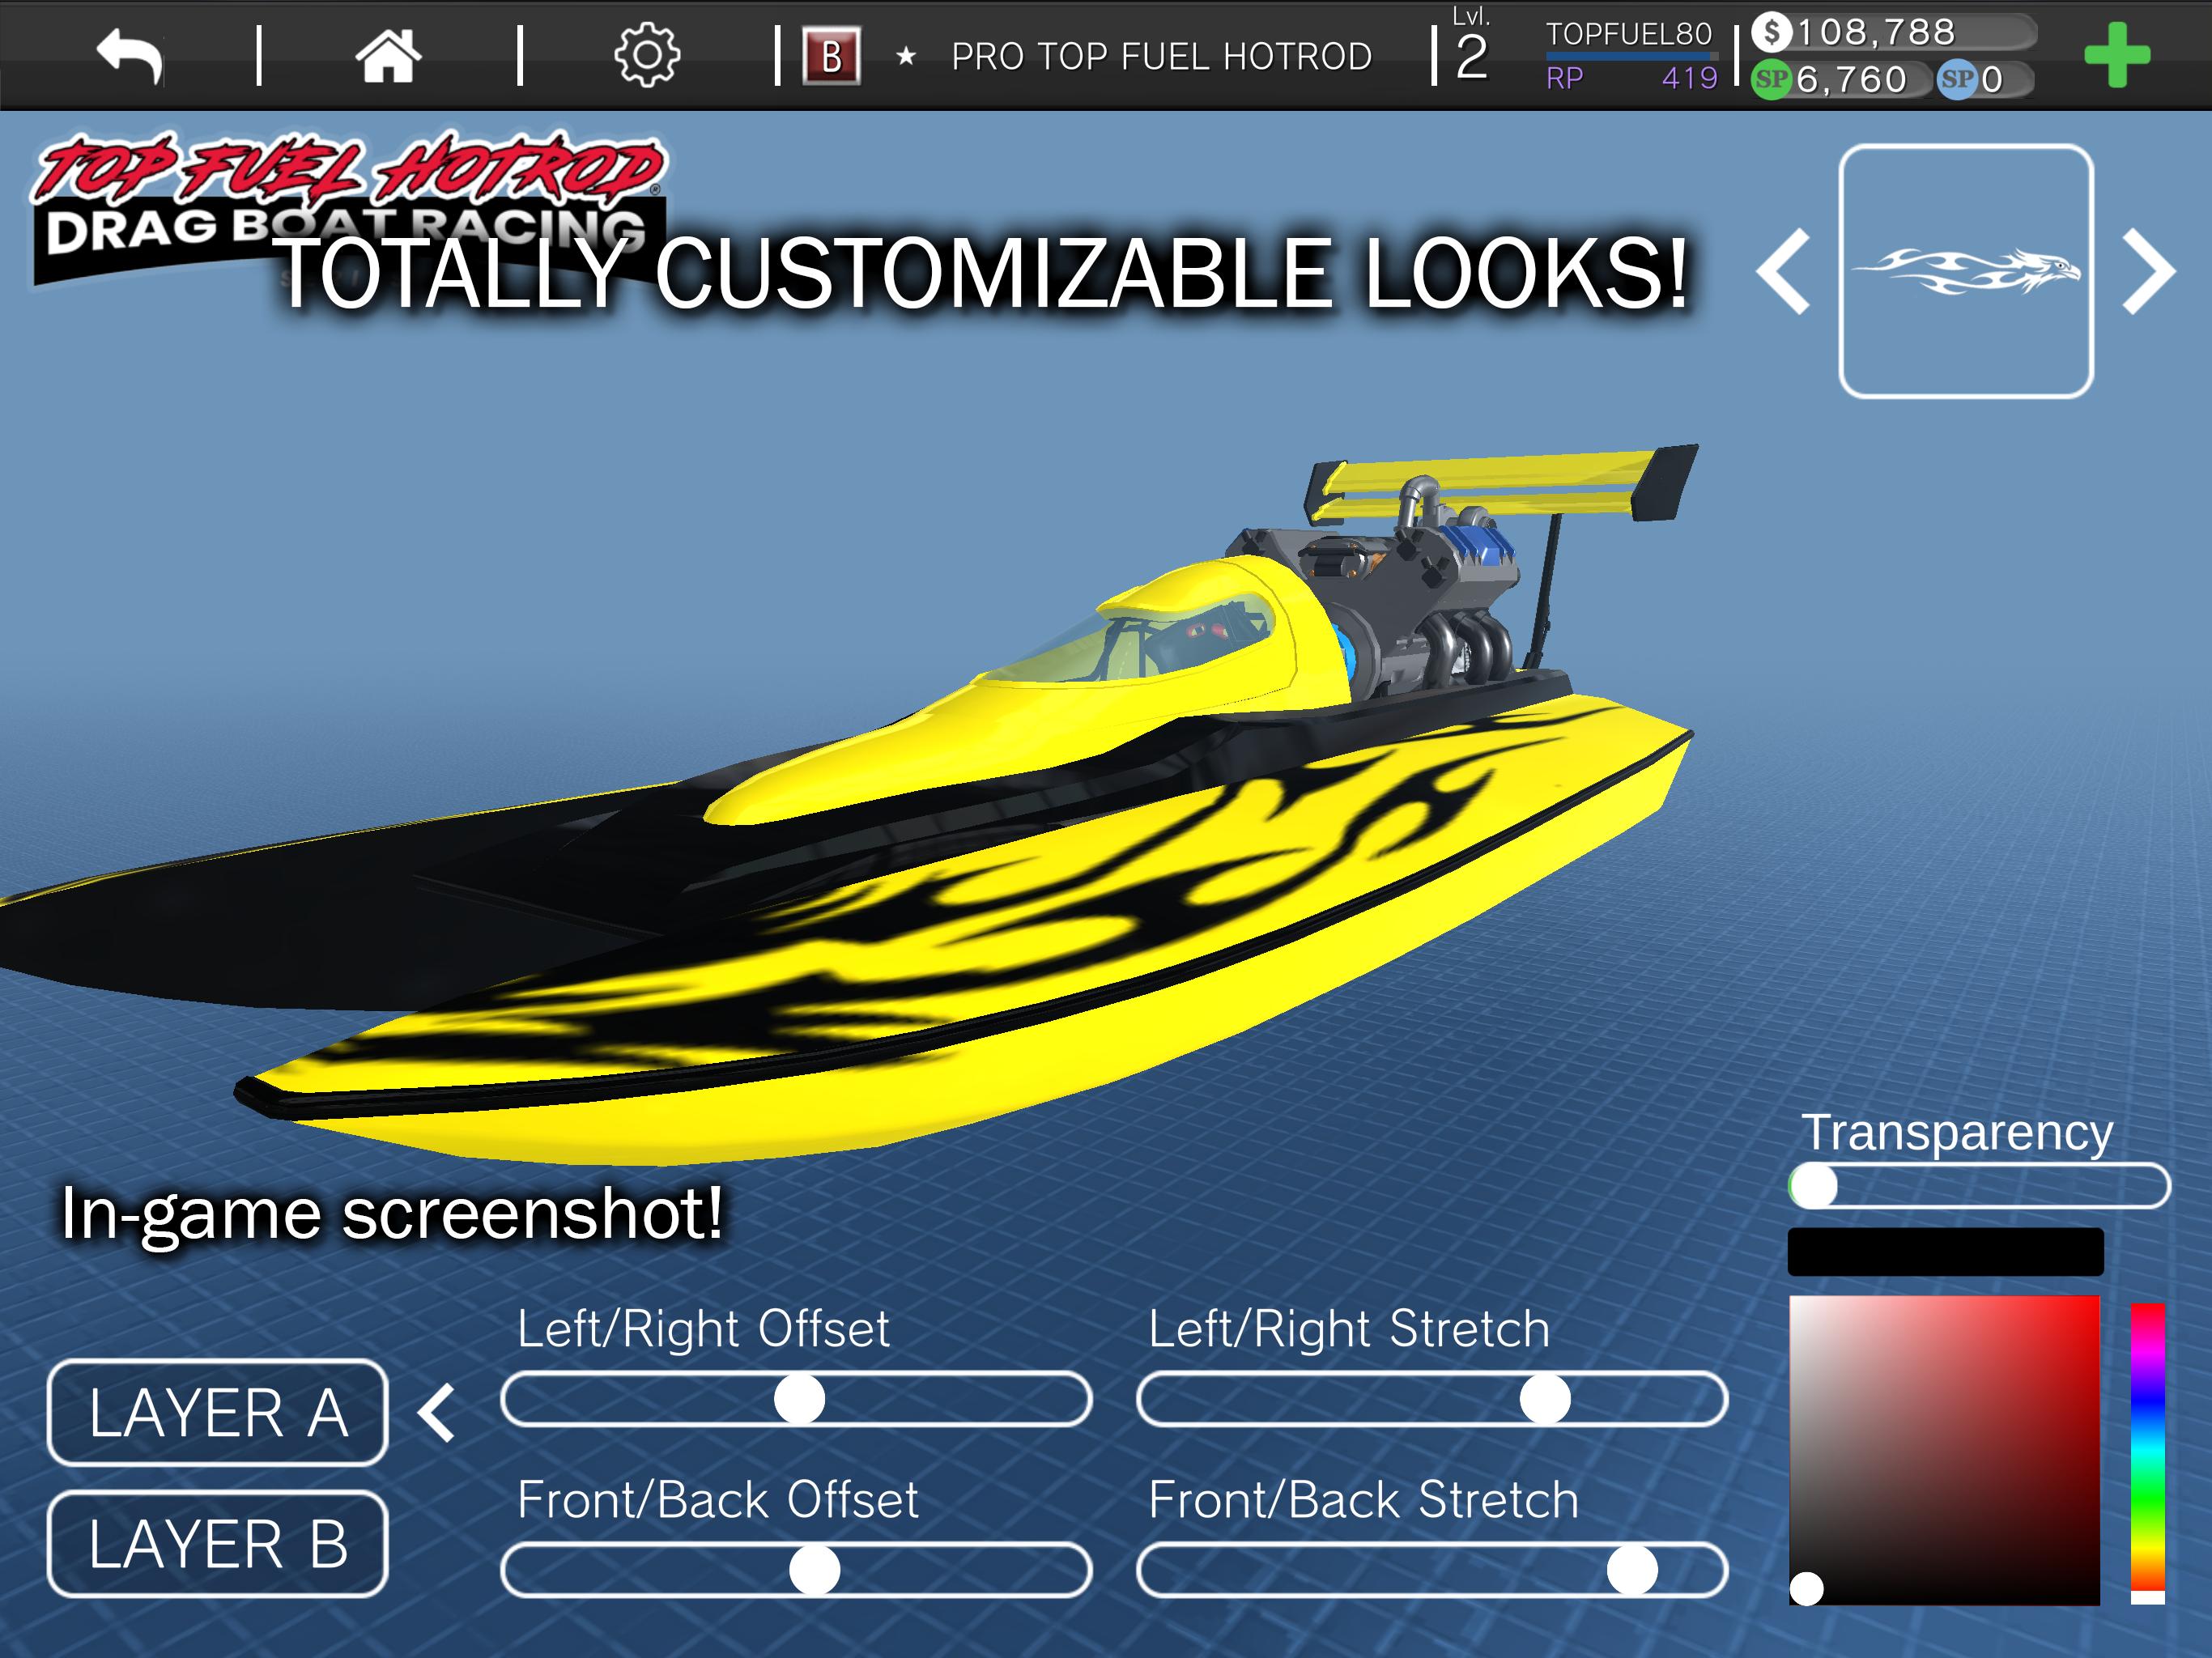 Top Fuel Hot Rod - Drag Boat Speed Racing Game 1.16 Screenshot 11